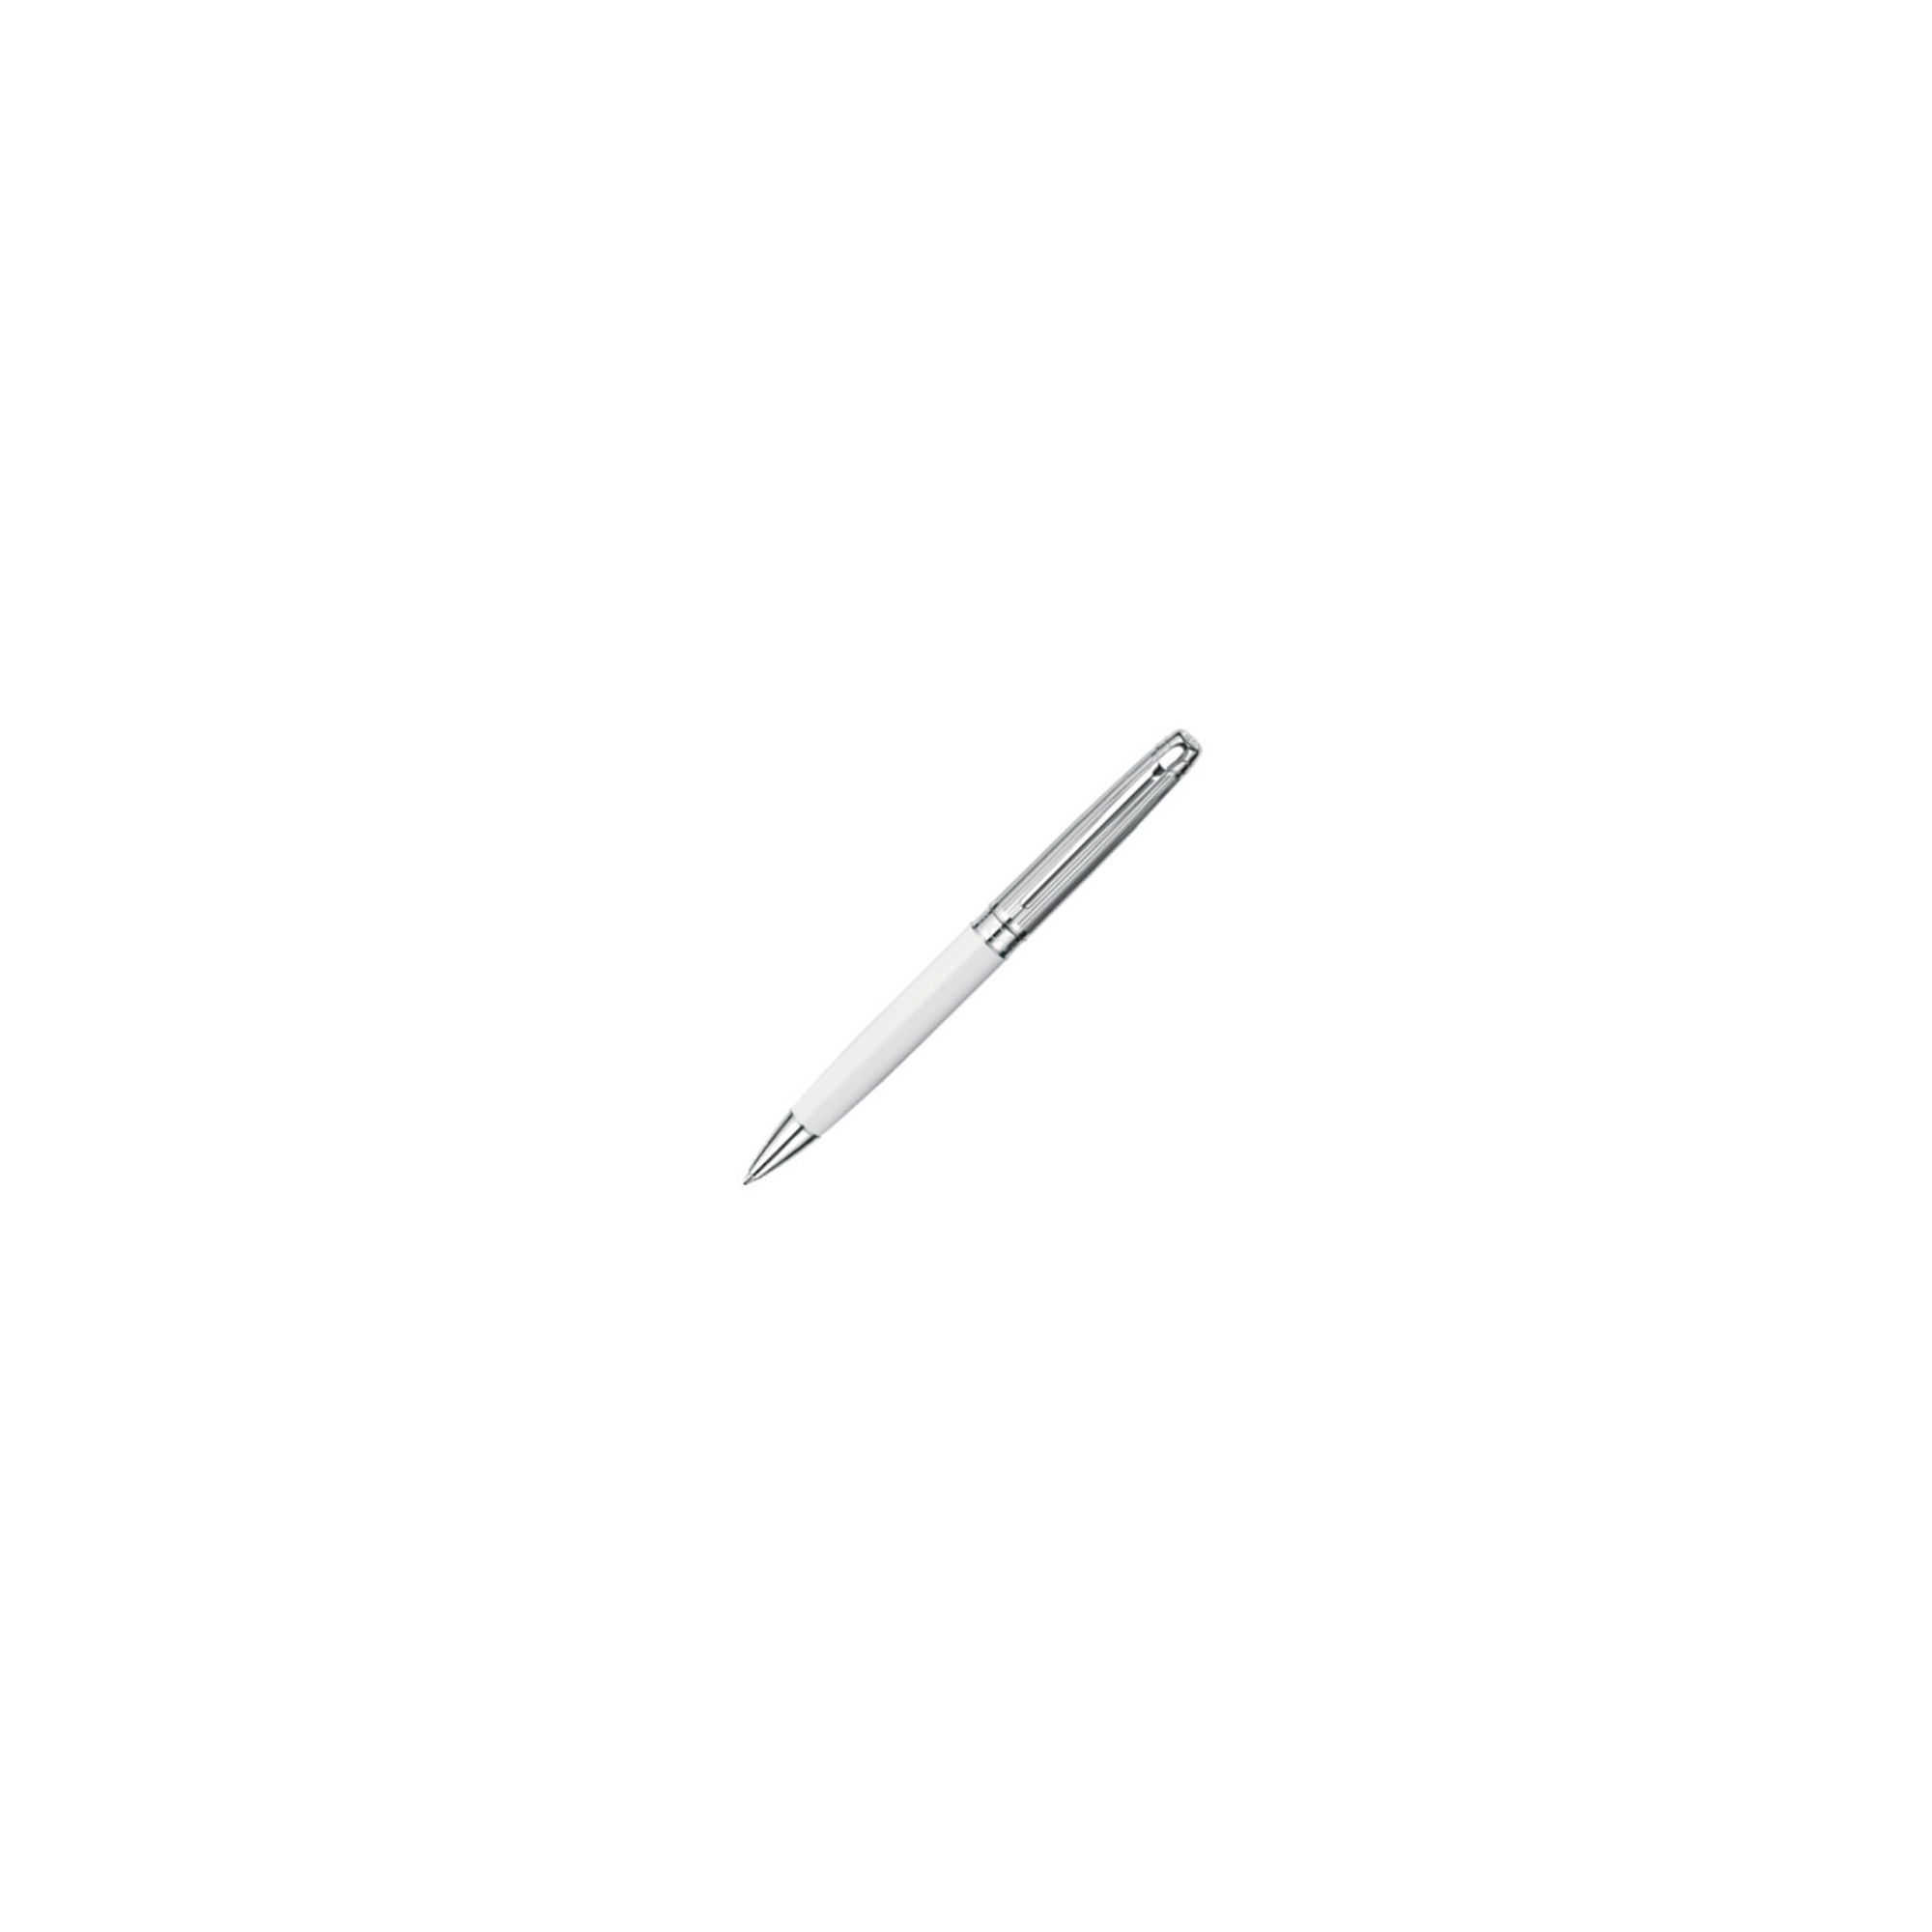 Caran d'Ache Leman Bi Colour White Ballpoint Pen at Tesco Direct